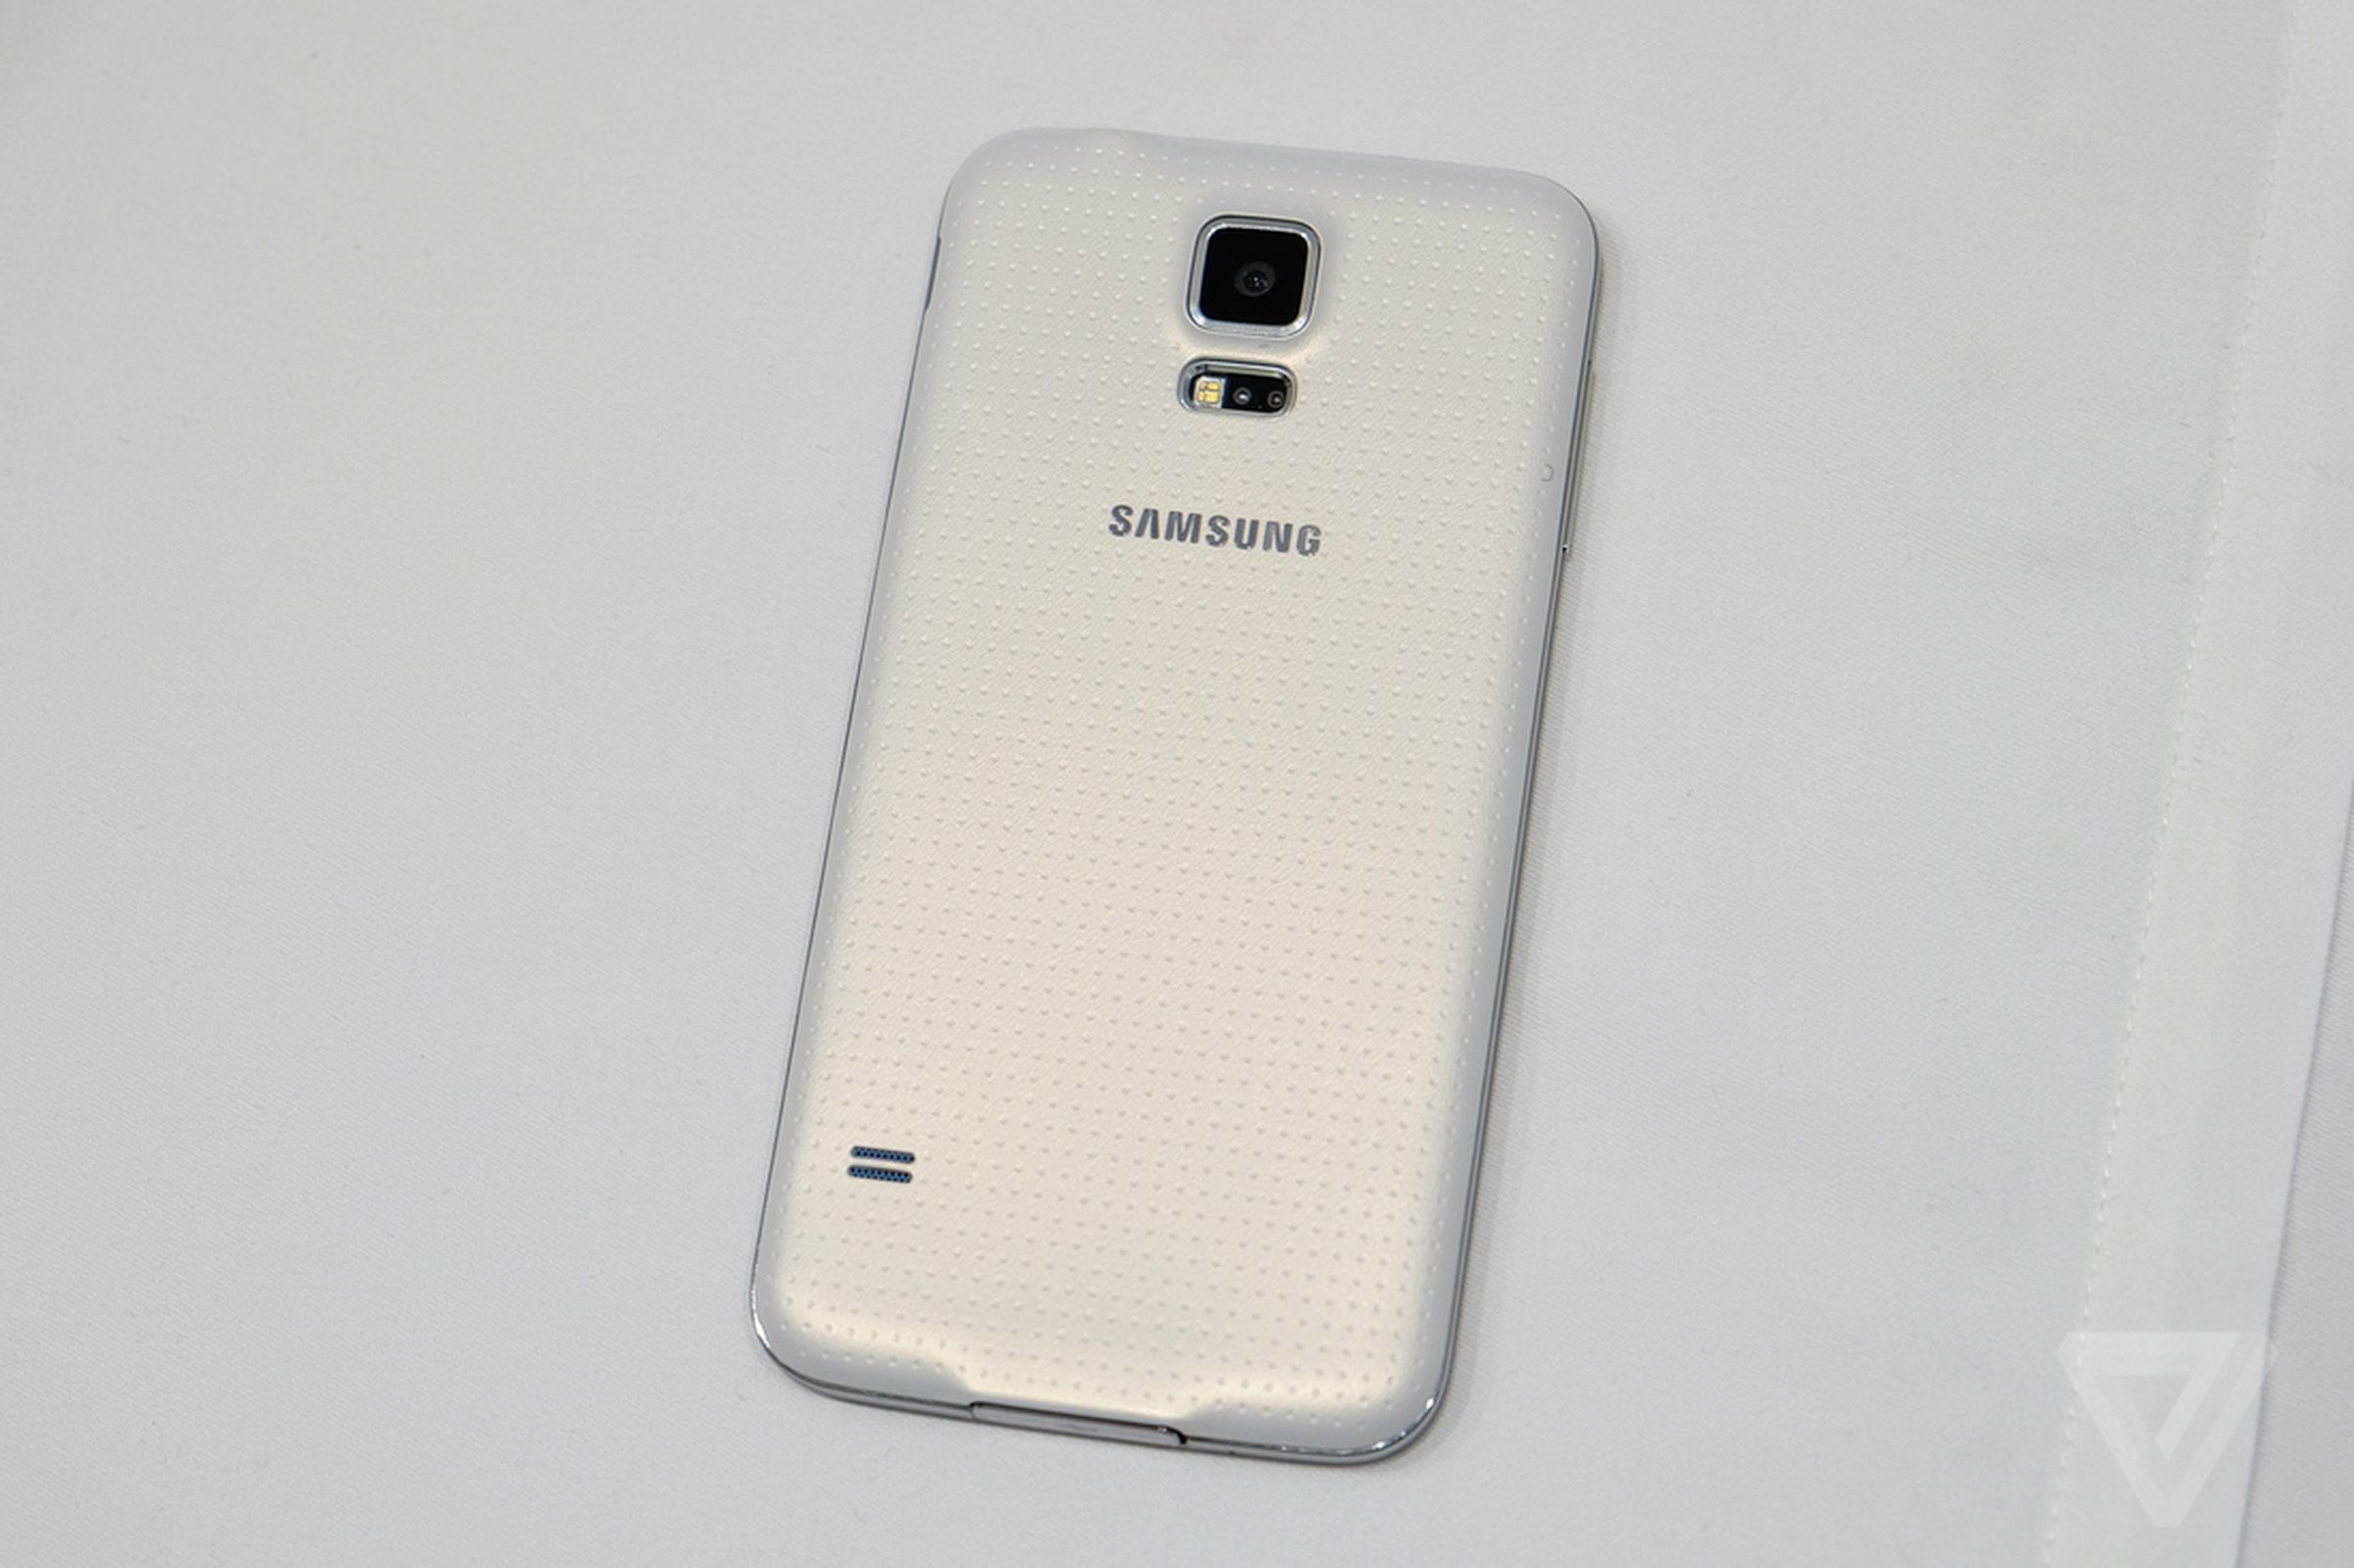 Samsung Galaxy S5 hands-on photos